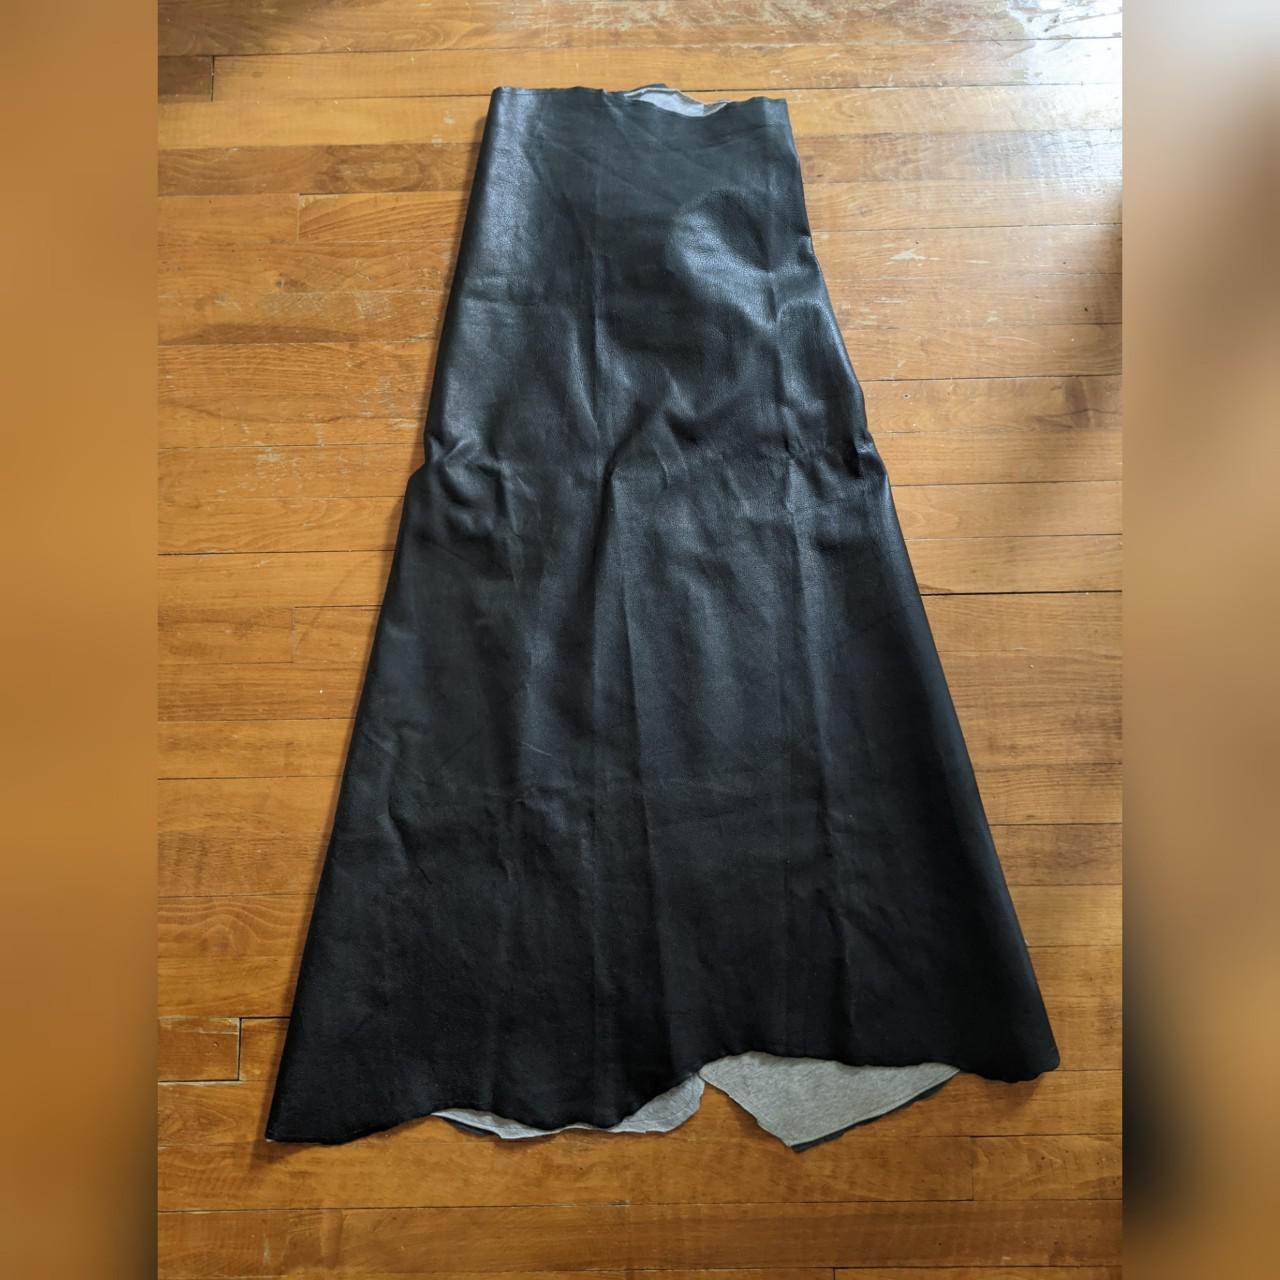 Maison Margiela Women's Black and Grey Skirt (2)